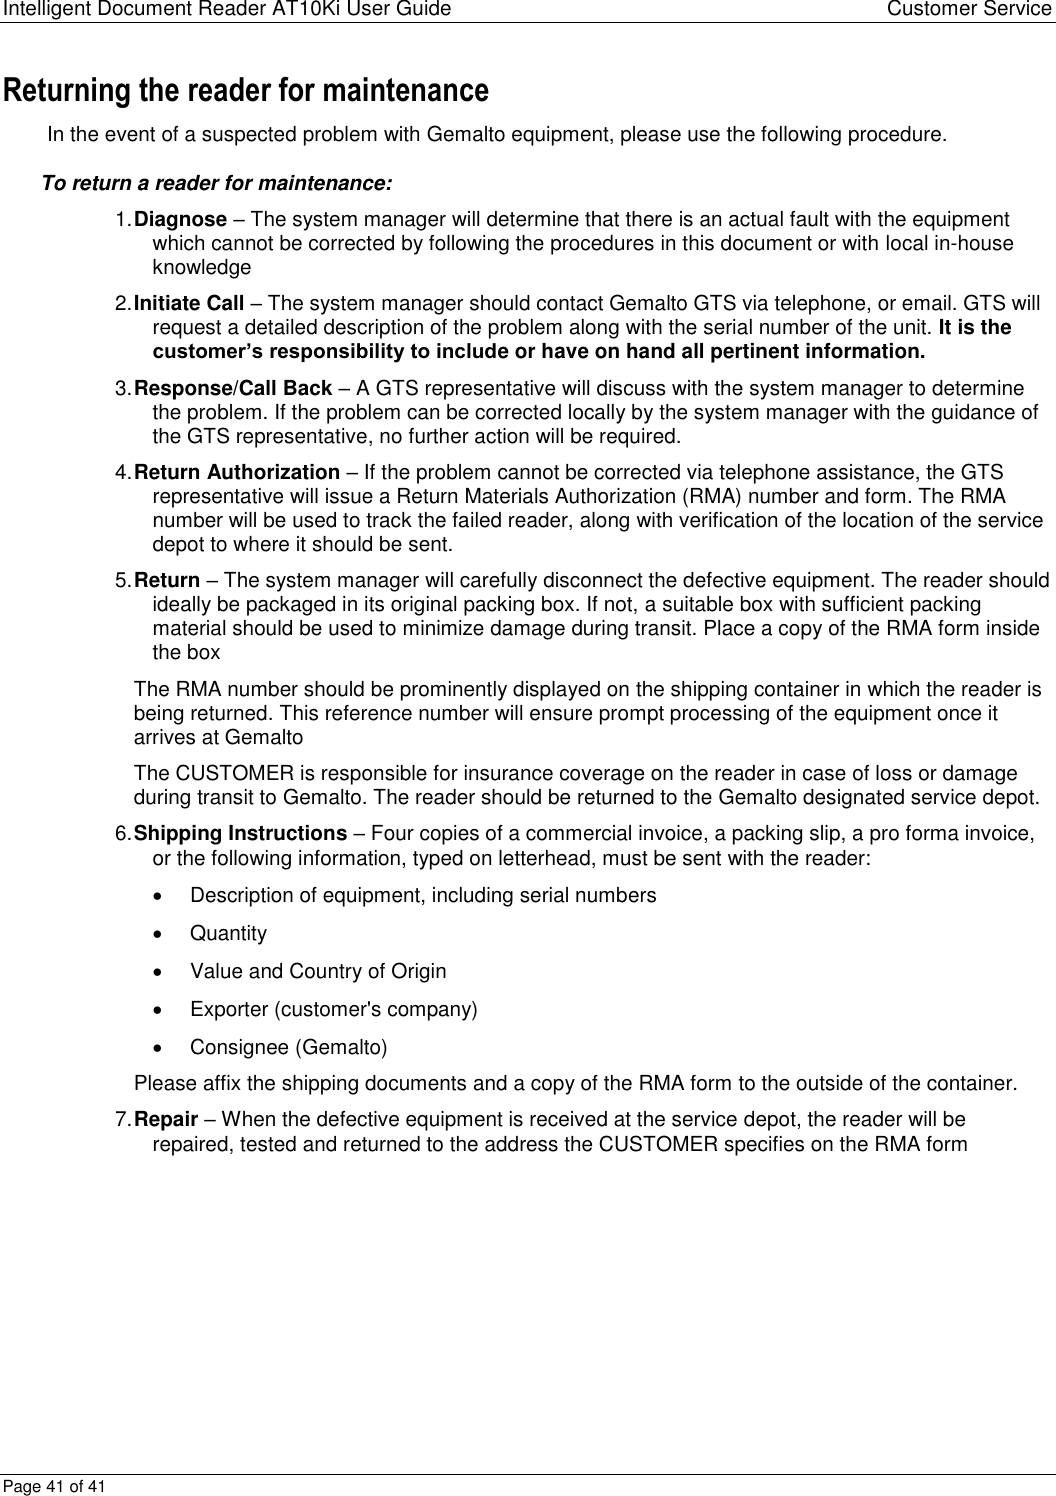 Page 41 of Thales DIS USA PR01523 ation Scanner User Manual